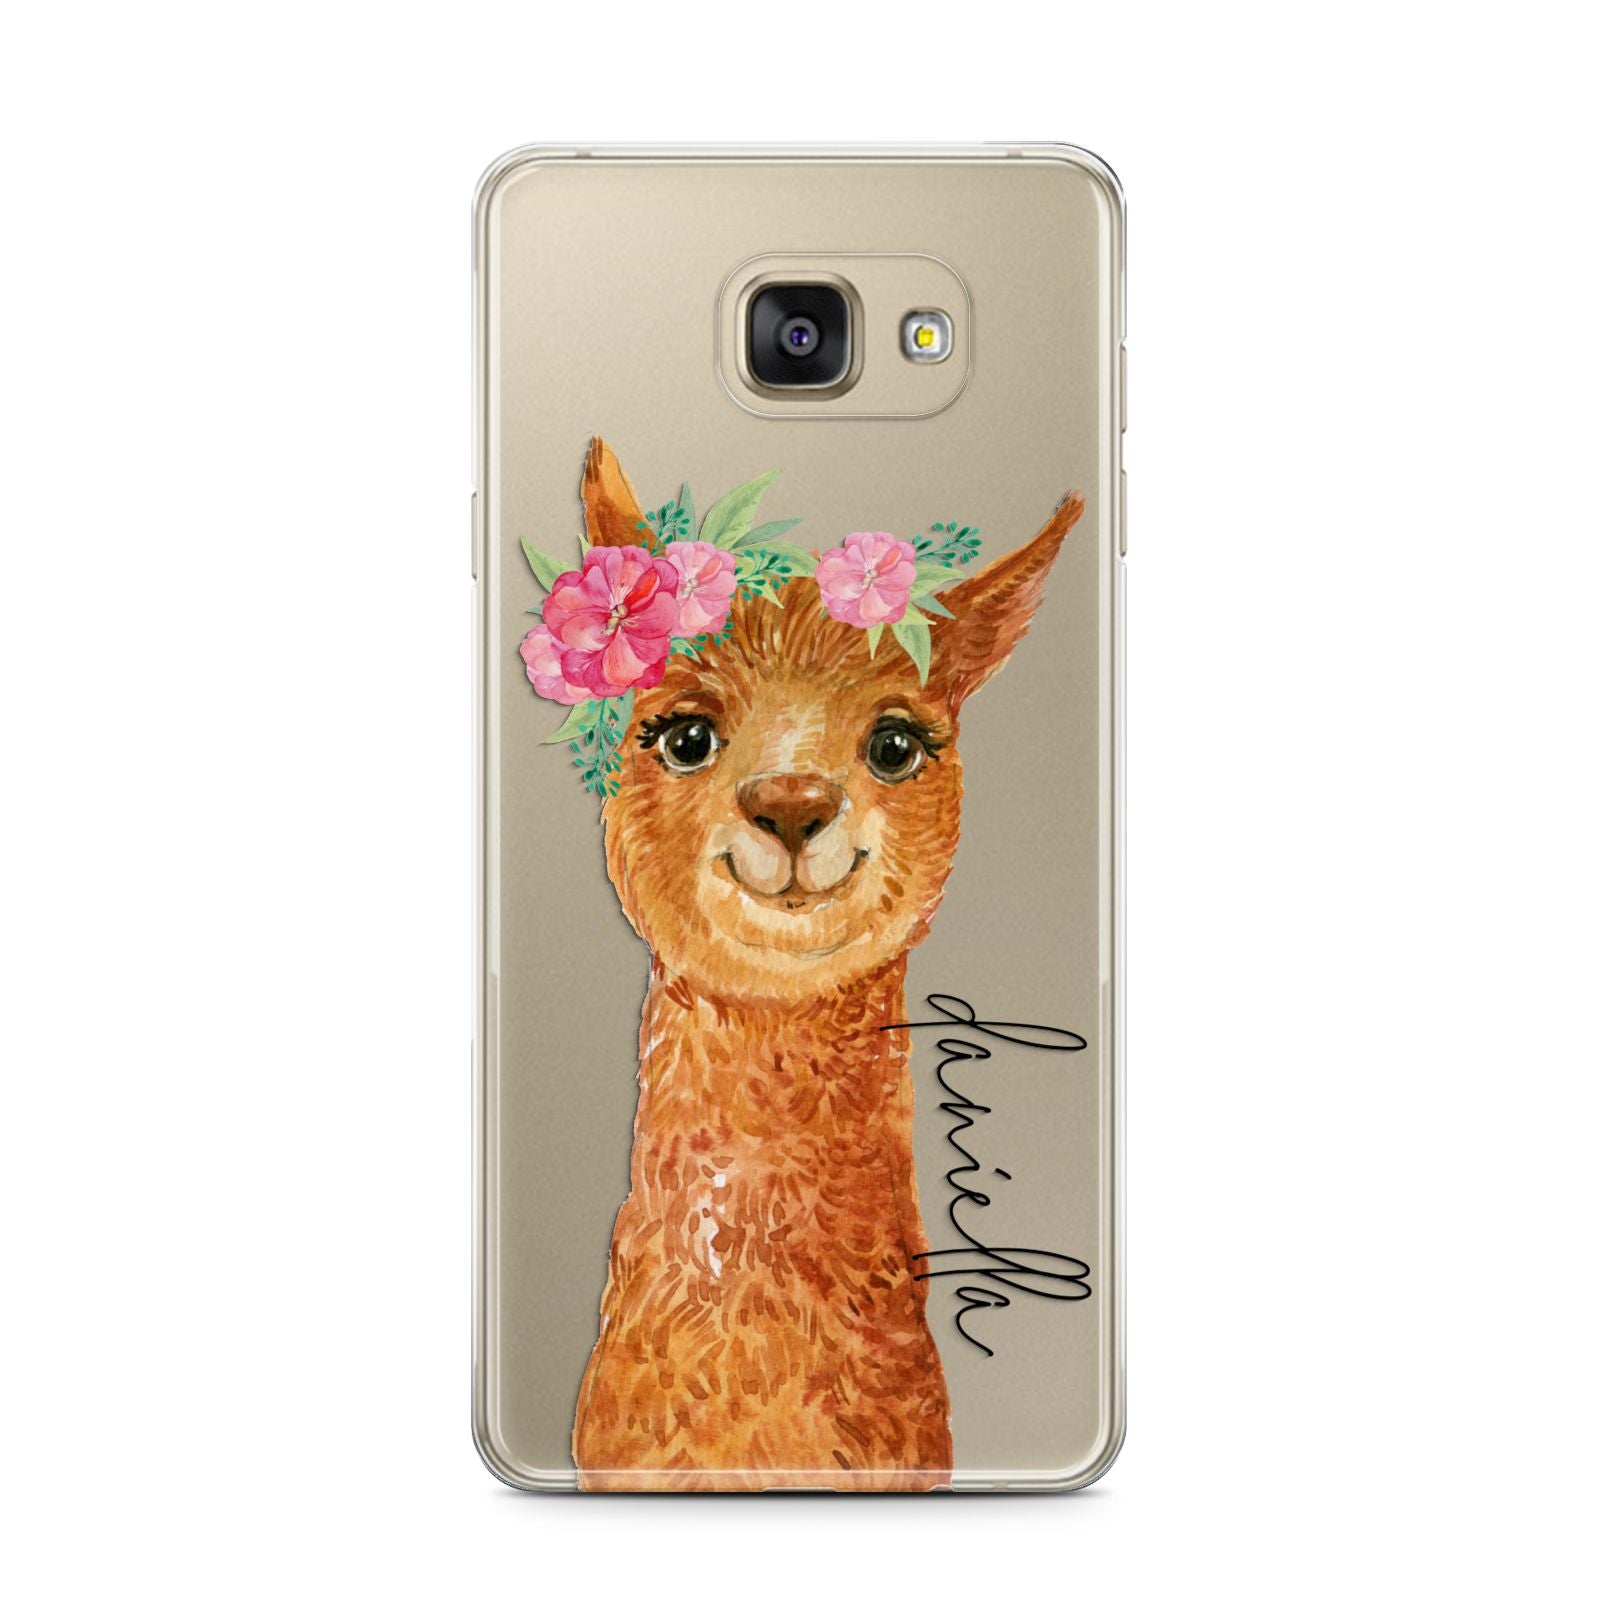 Personalised Llama Samsung Galaxy A7 2016 Case on gold phone